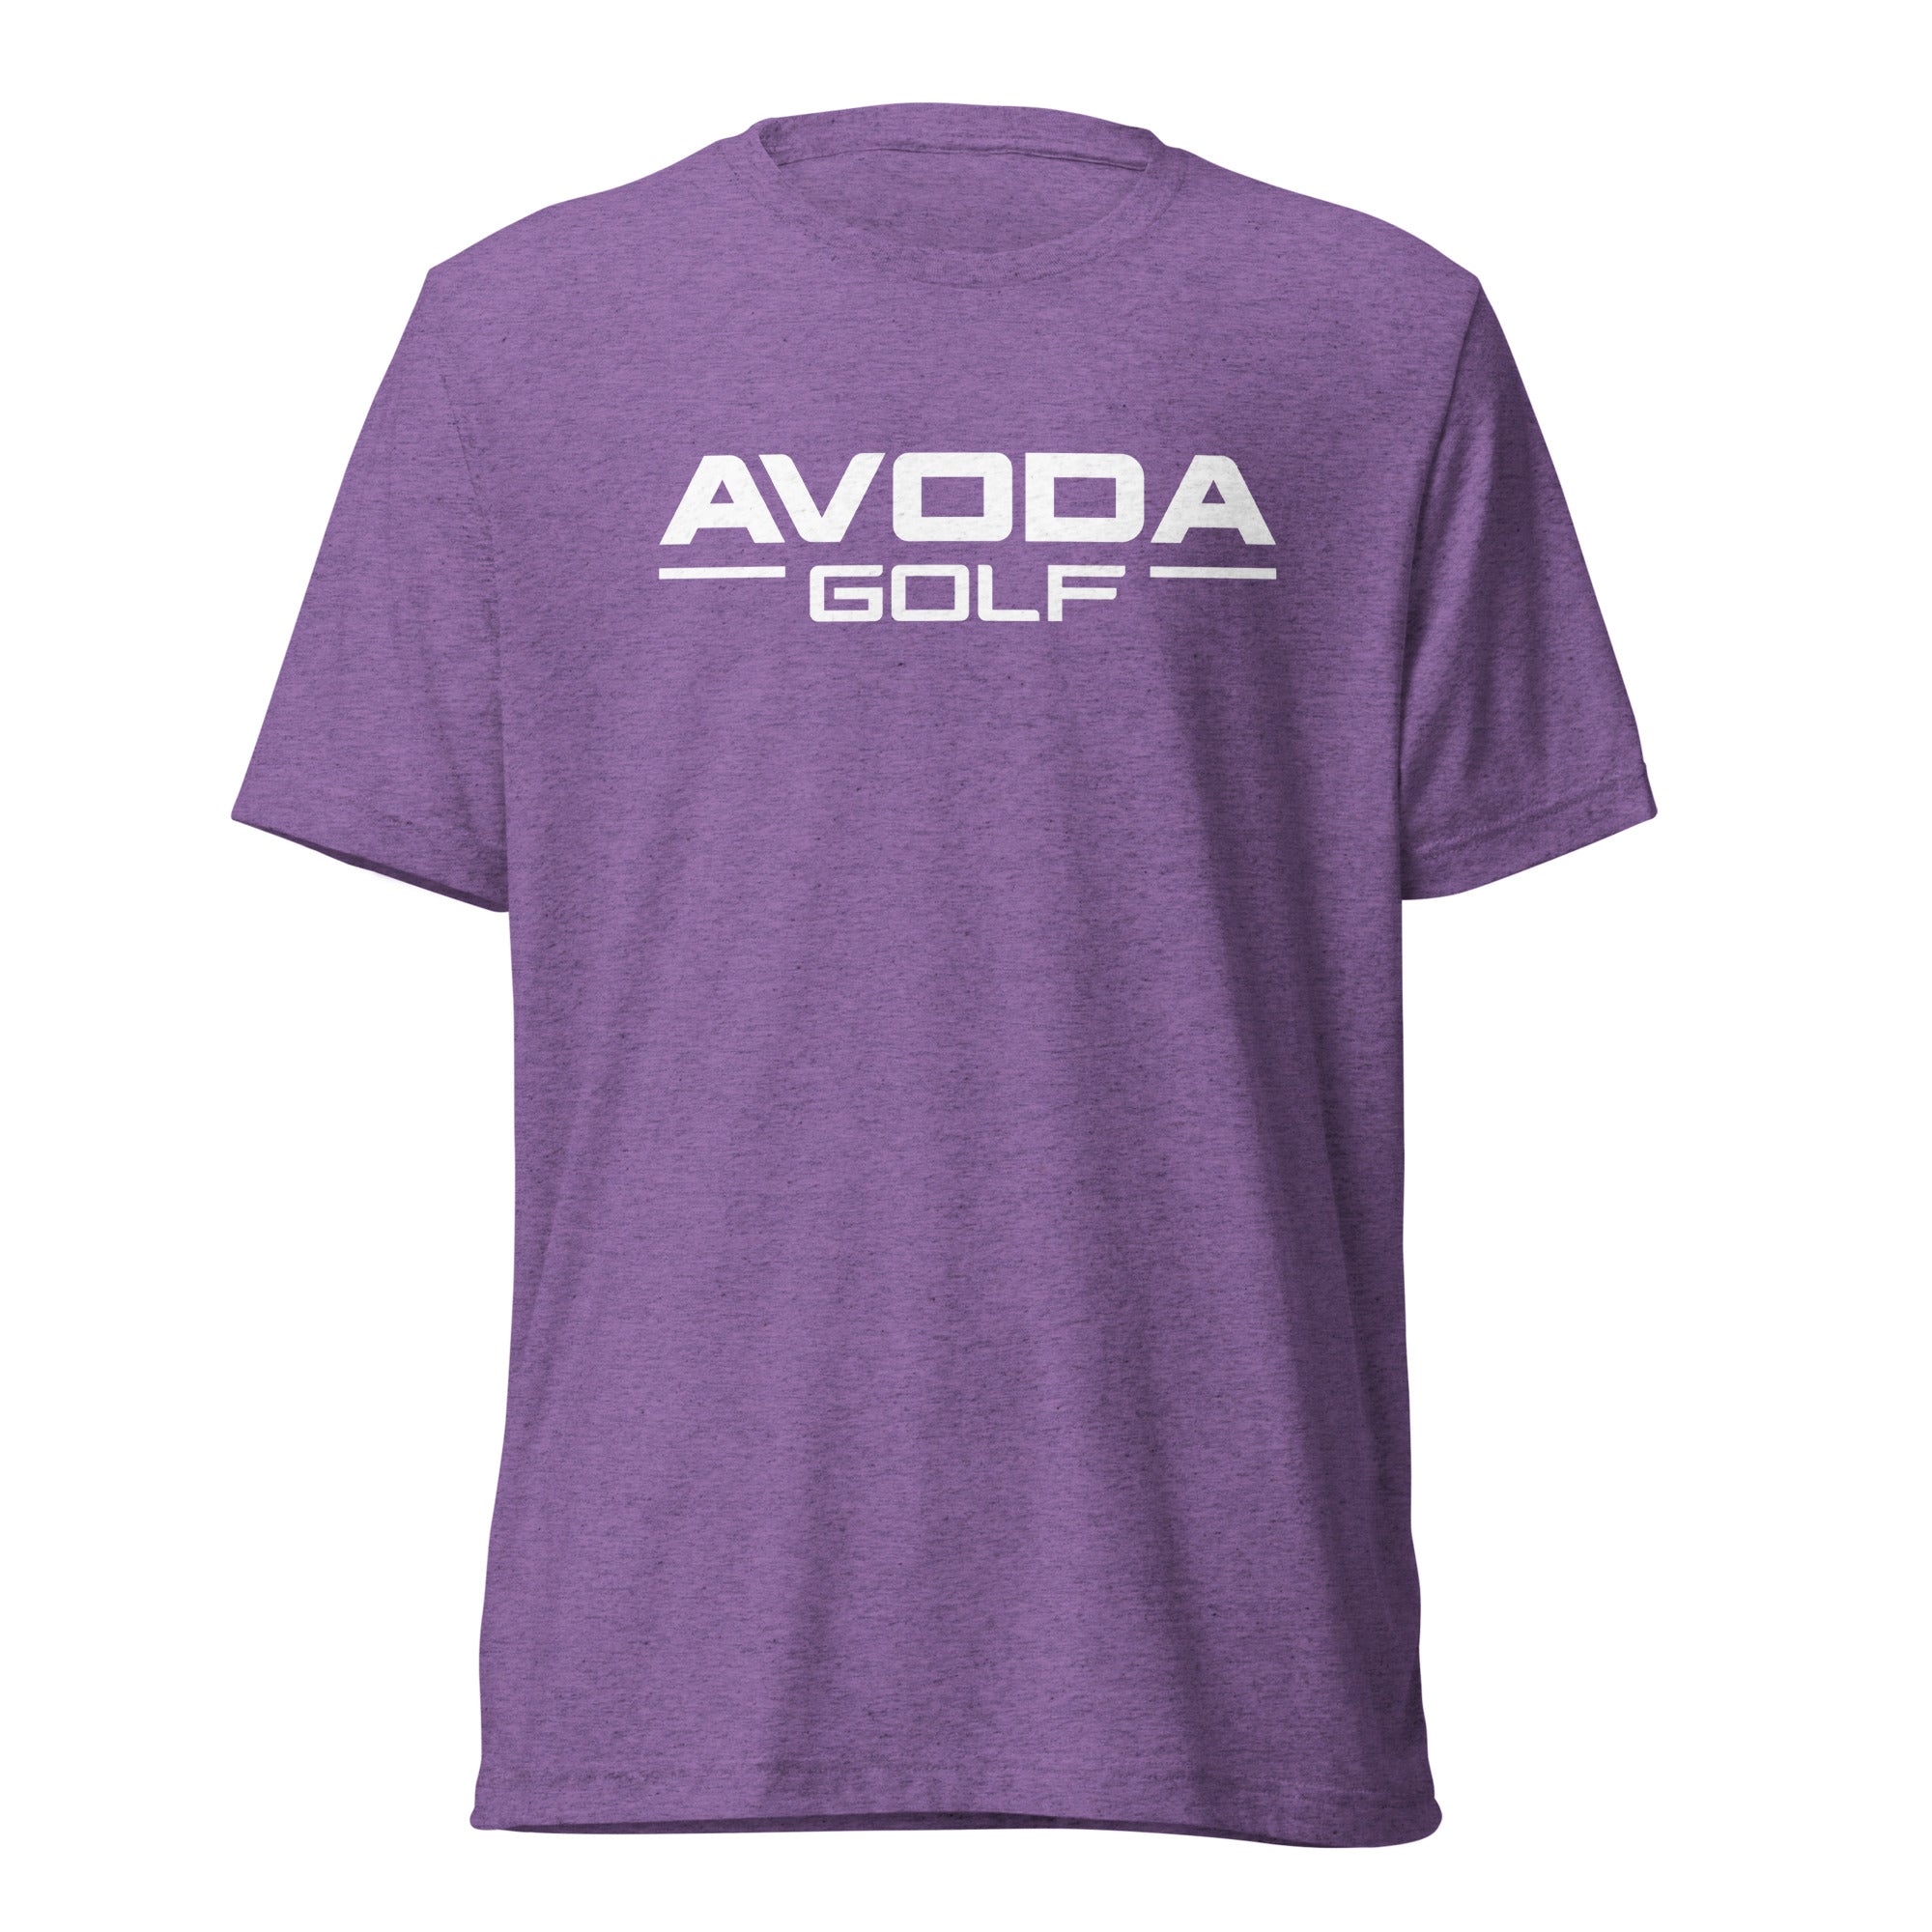 Avoda Golf Short Sleeve T-Shirt